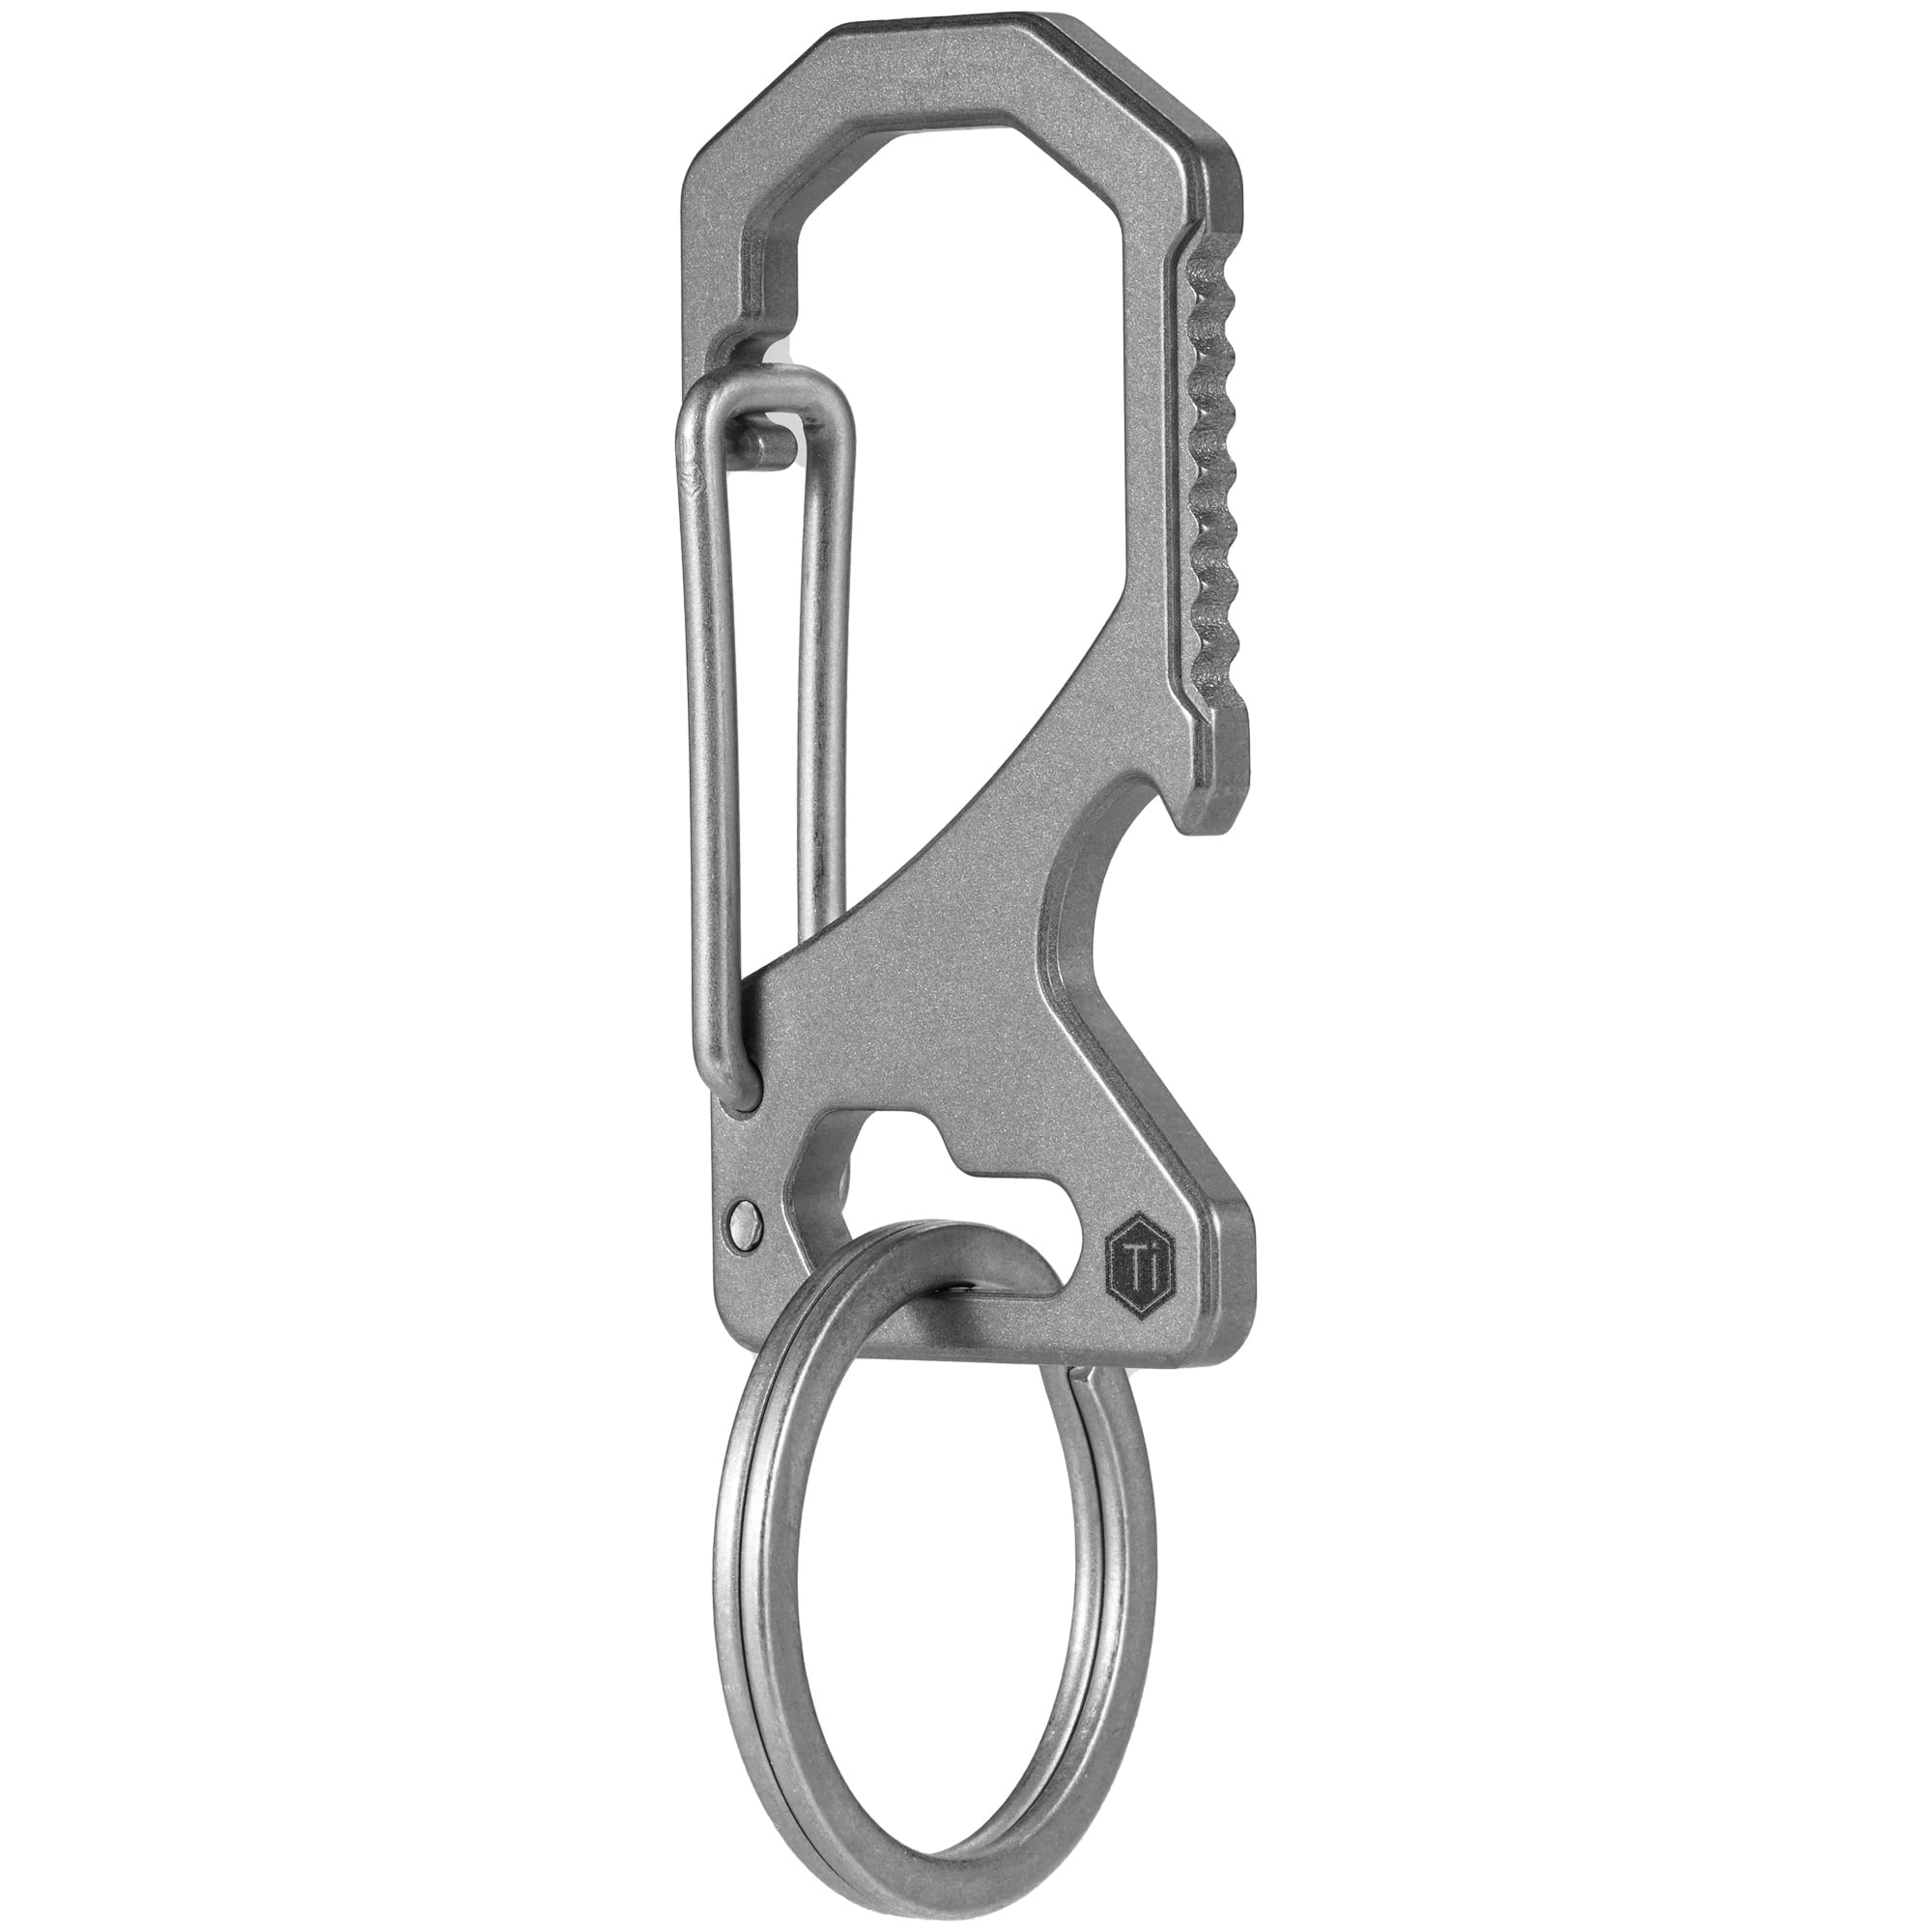 Anoley Carabiner Clip Retractable Ring Set Titanium Keychain Quick Release  Hooks for Men Women